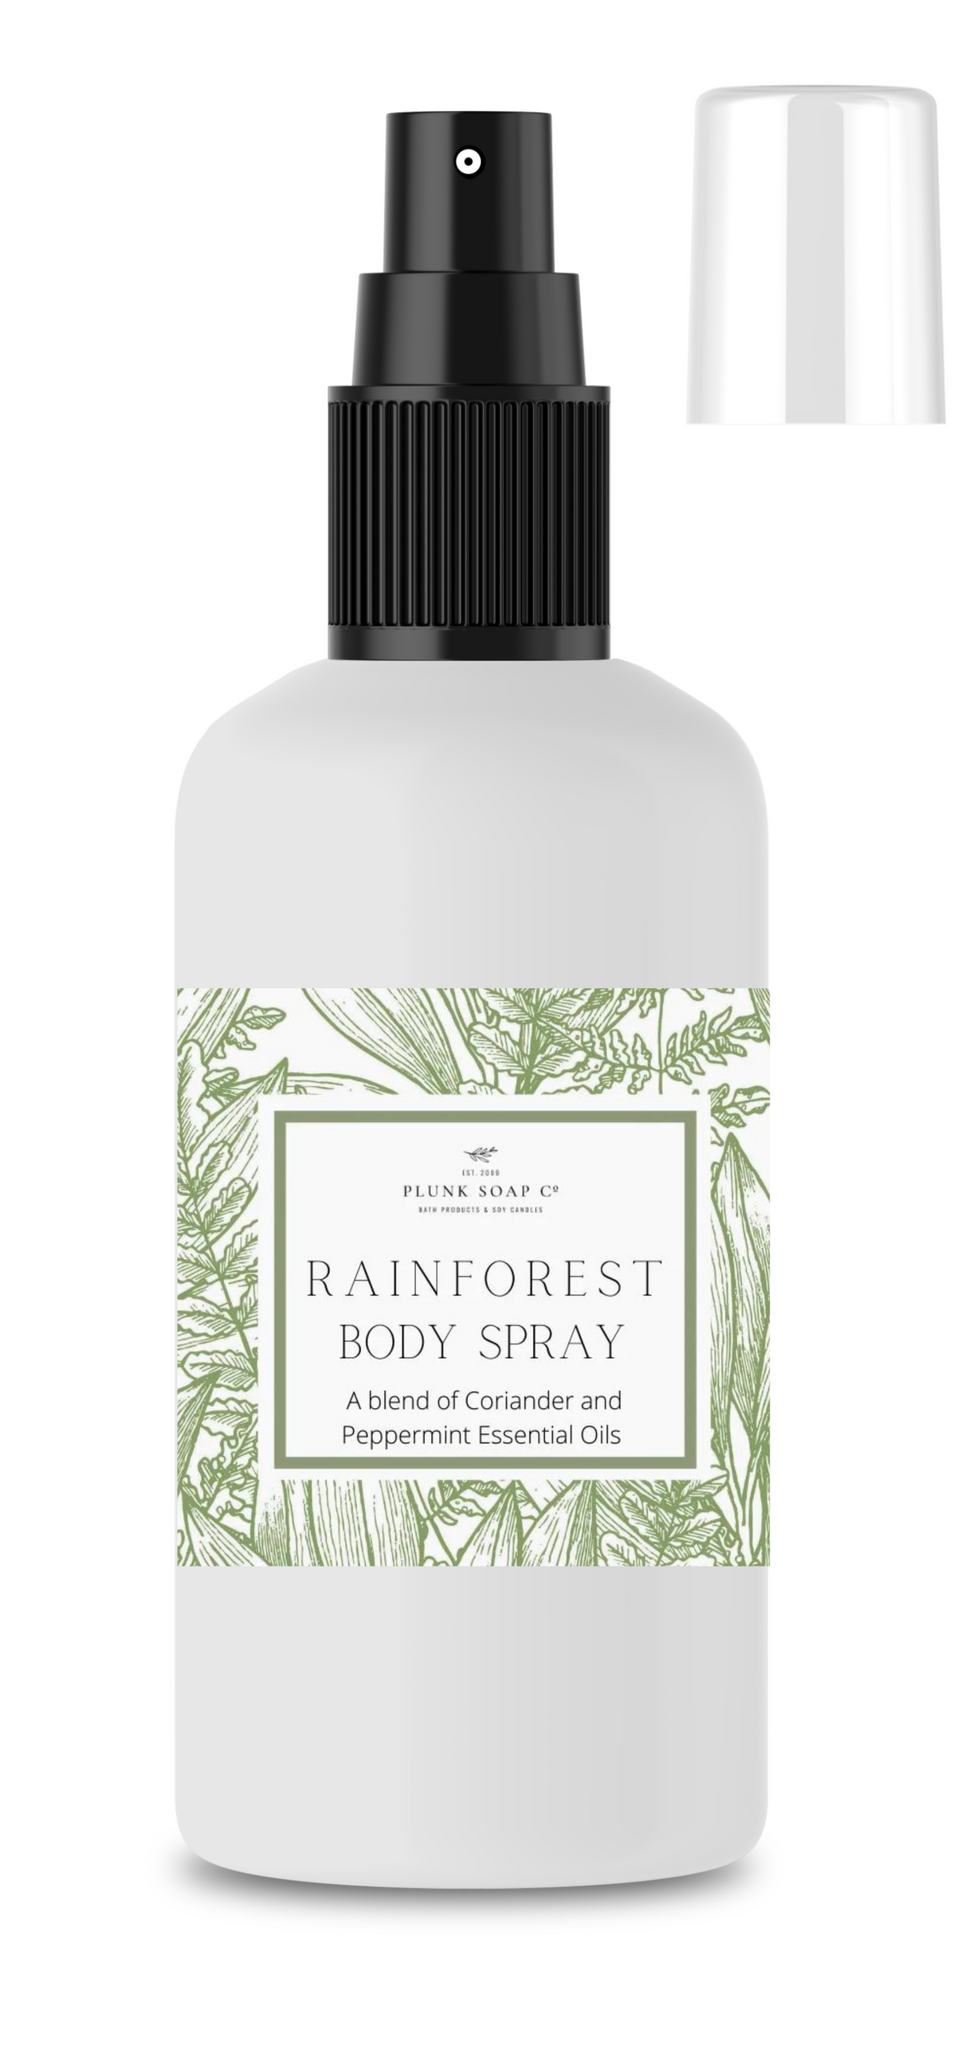 Rainforest Body Spray